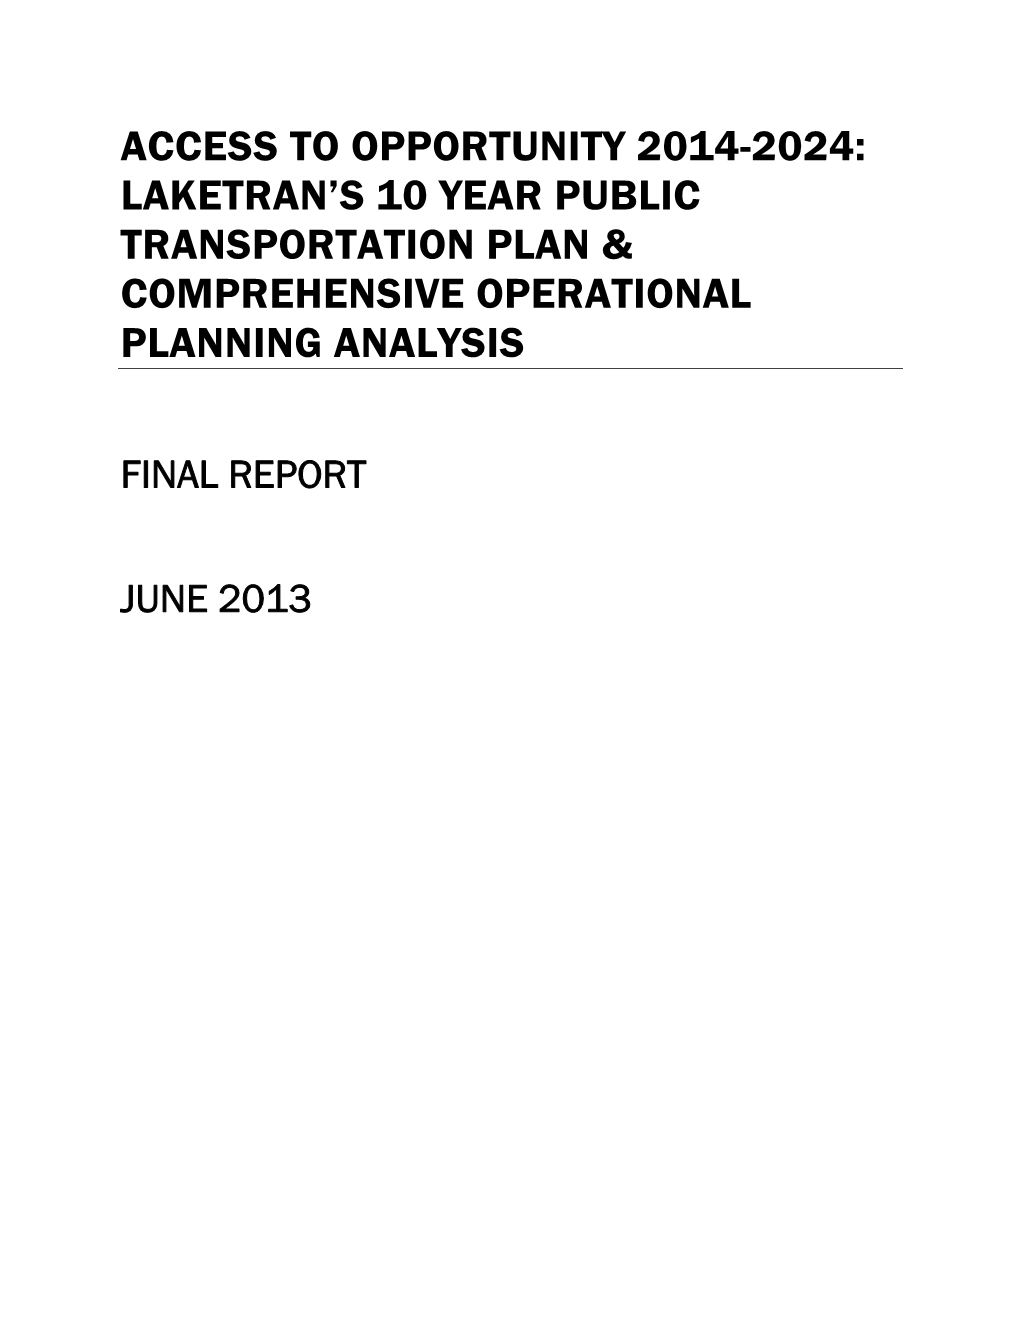 Laketran's 10 Year Public Transportation Plan